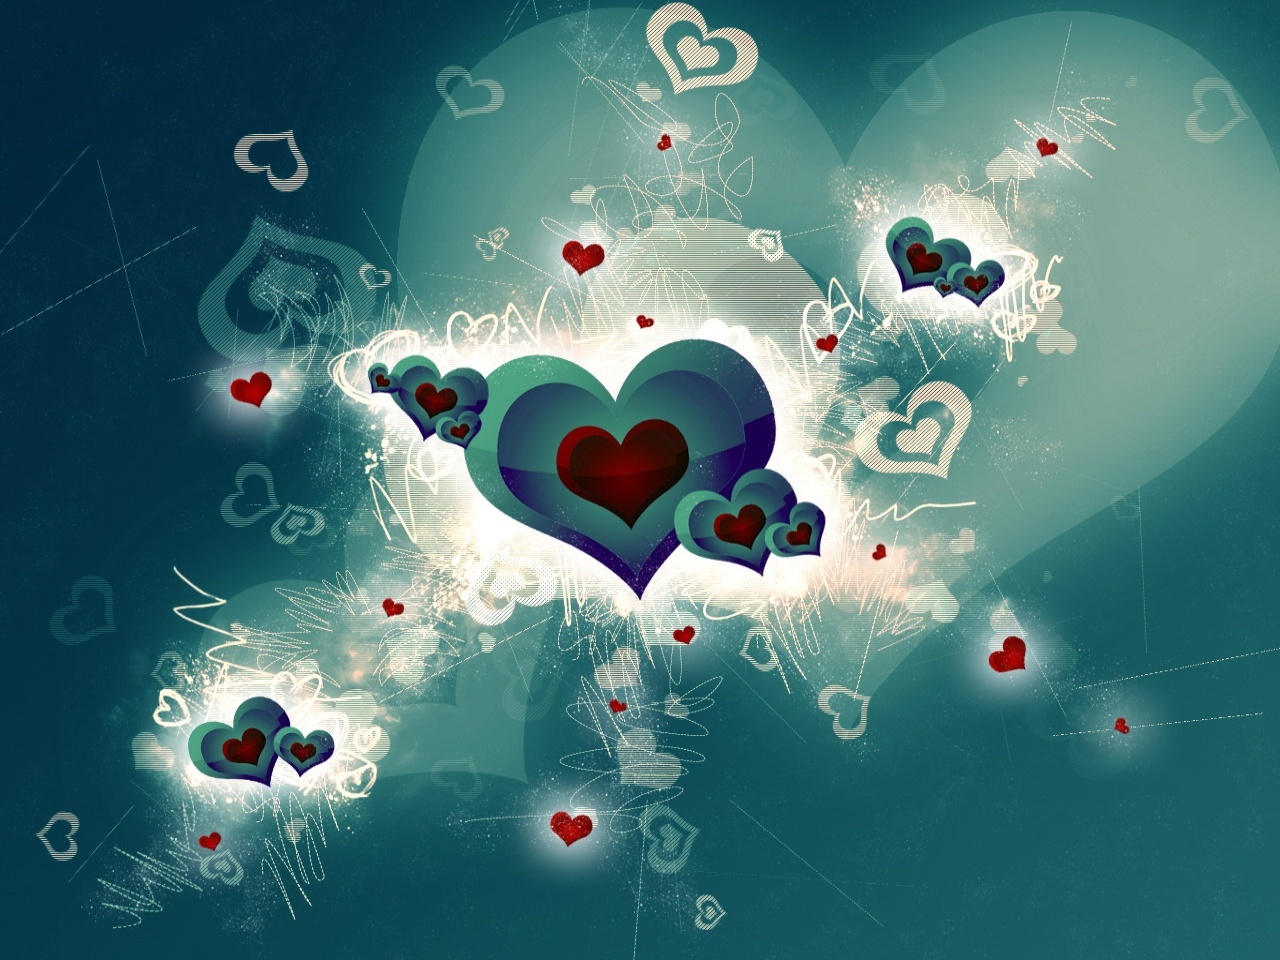 High Quality Love hearts 3d vector wallpaper desktop background Free